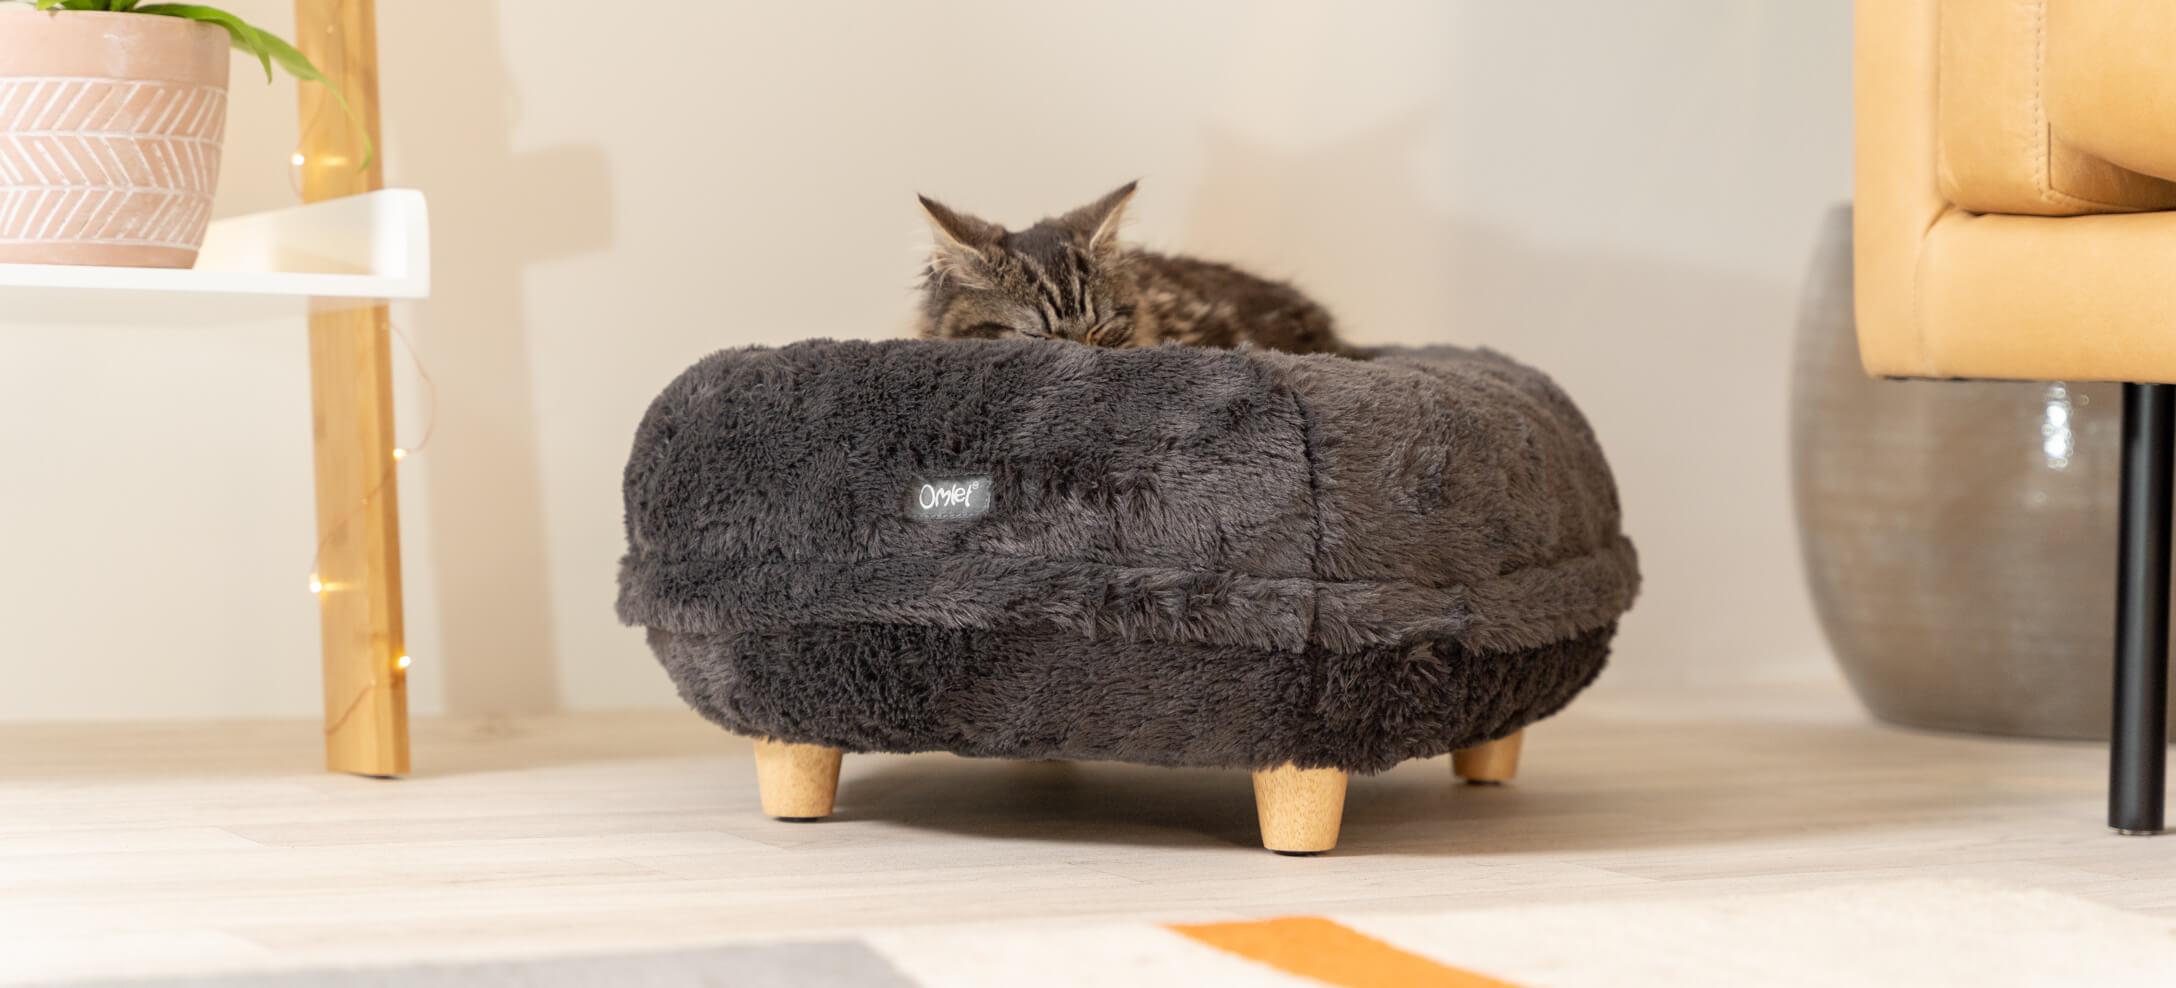 A tabby kitten sleeping on a donut shaped bed